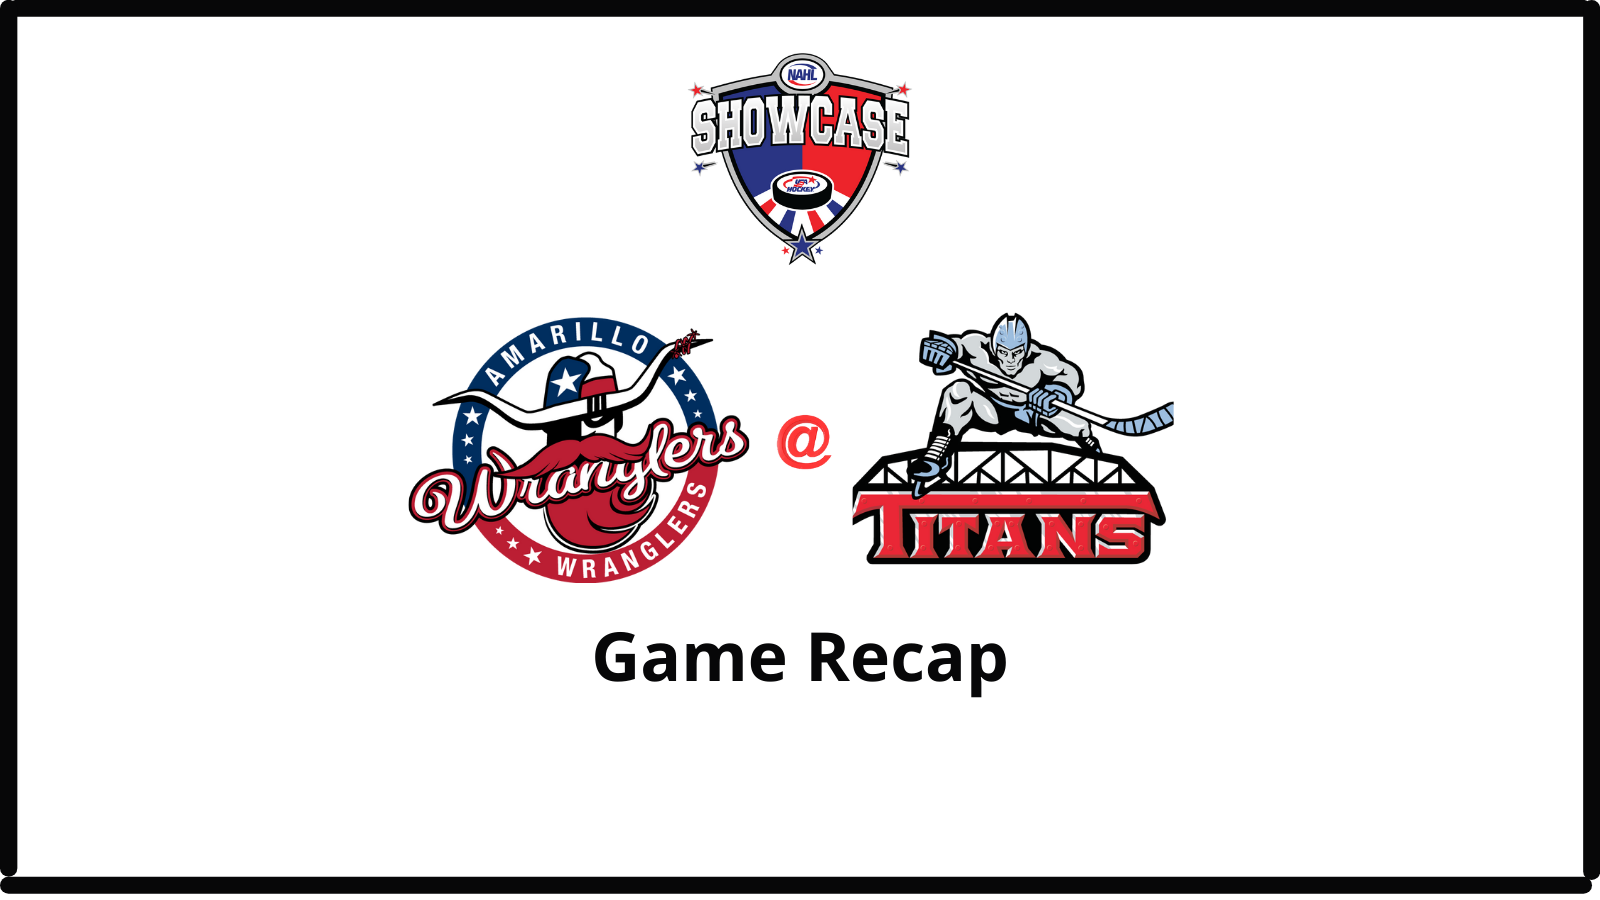 Skrastins’ 4 goals help Wranglers defeat Titans 5 - 2